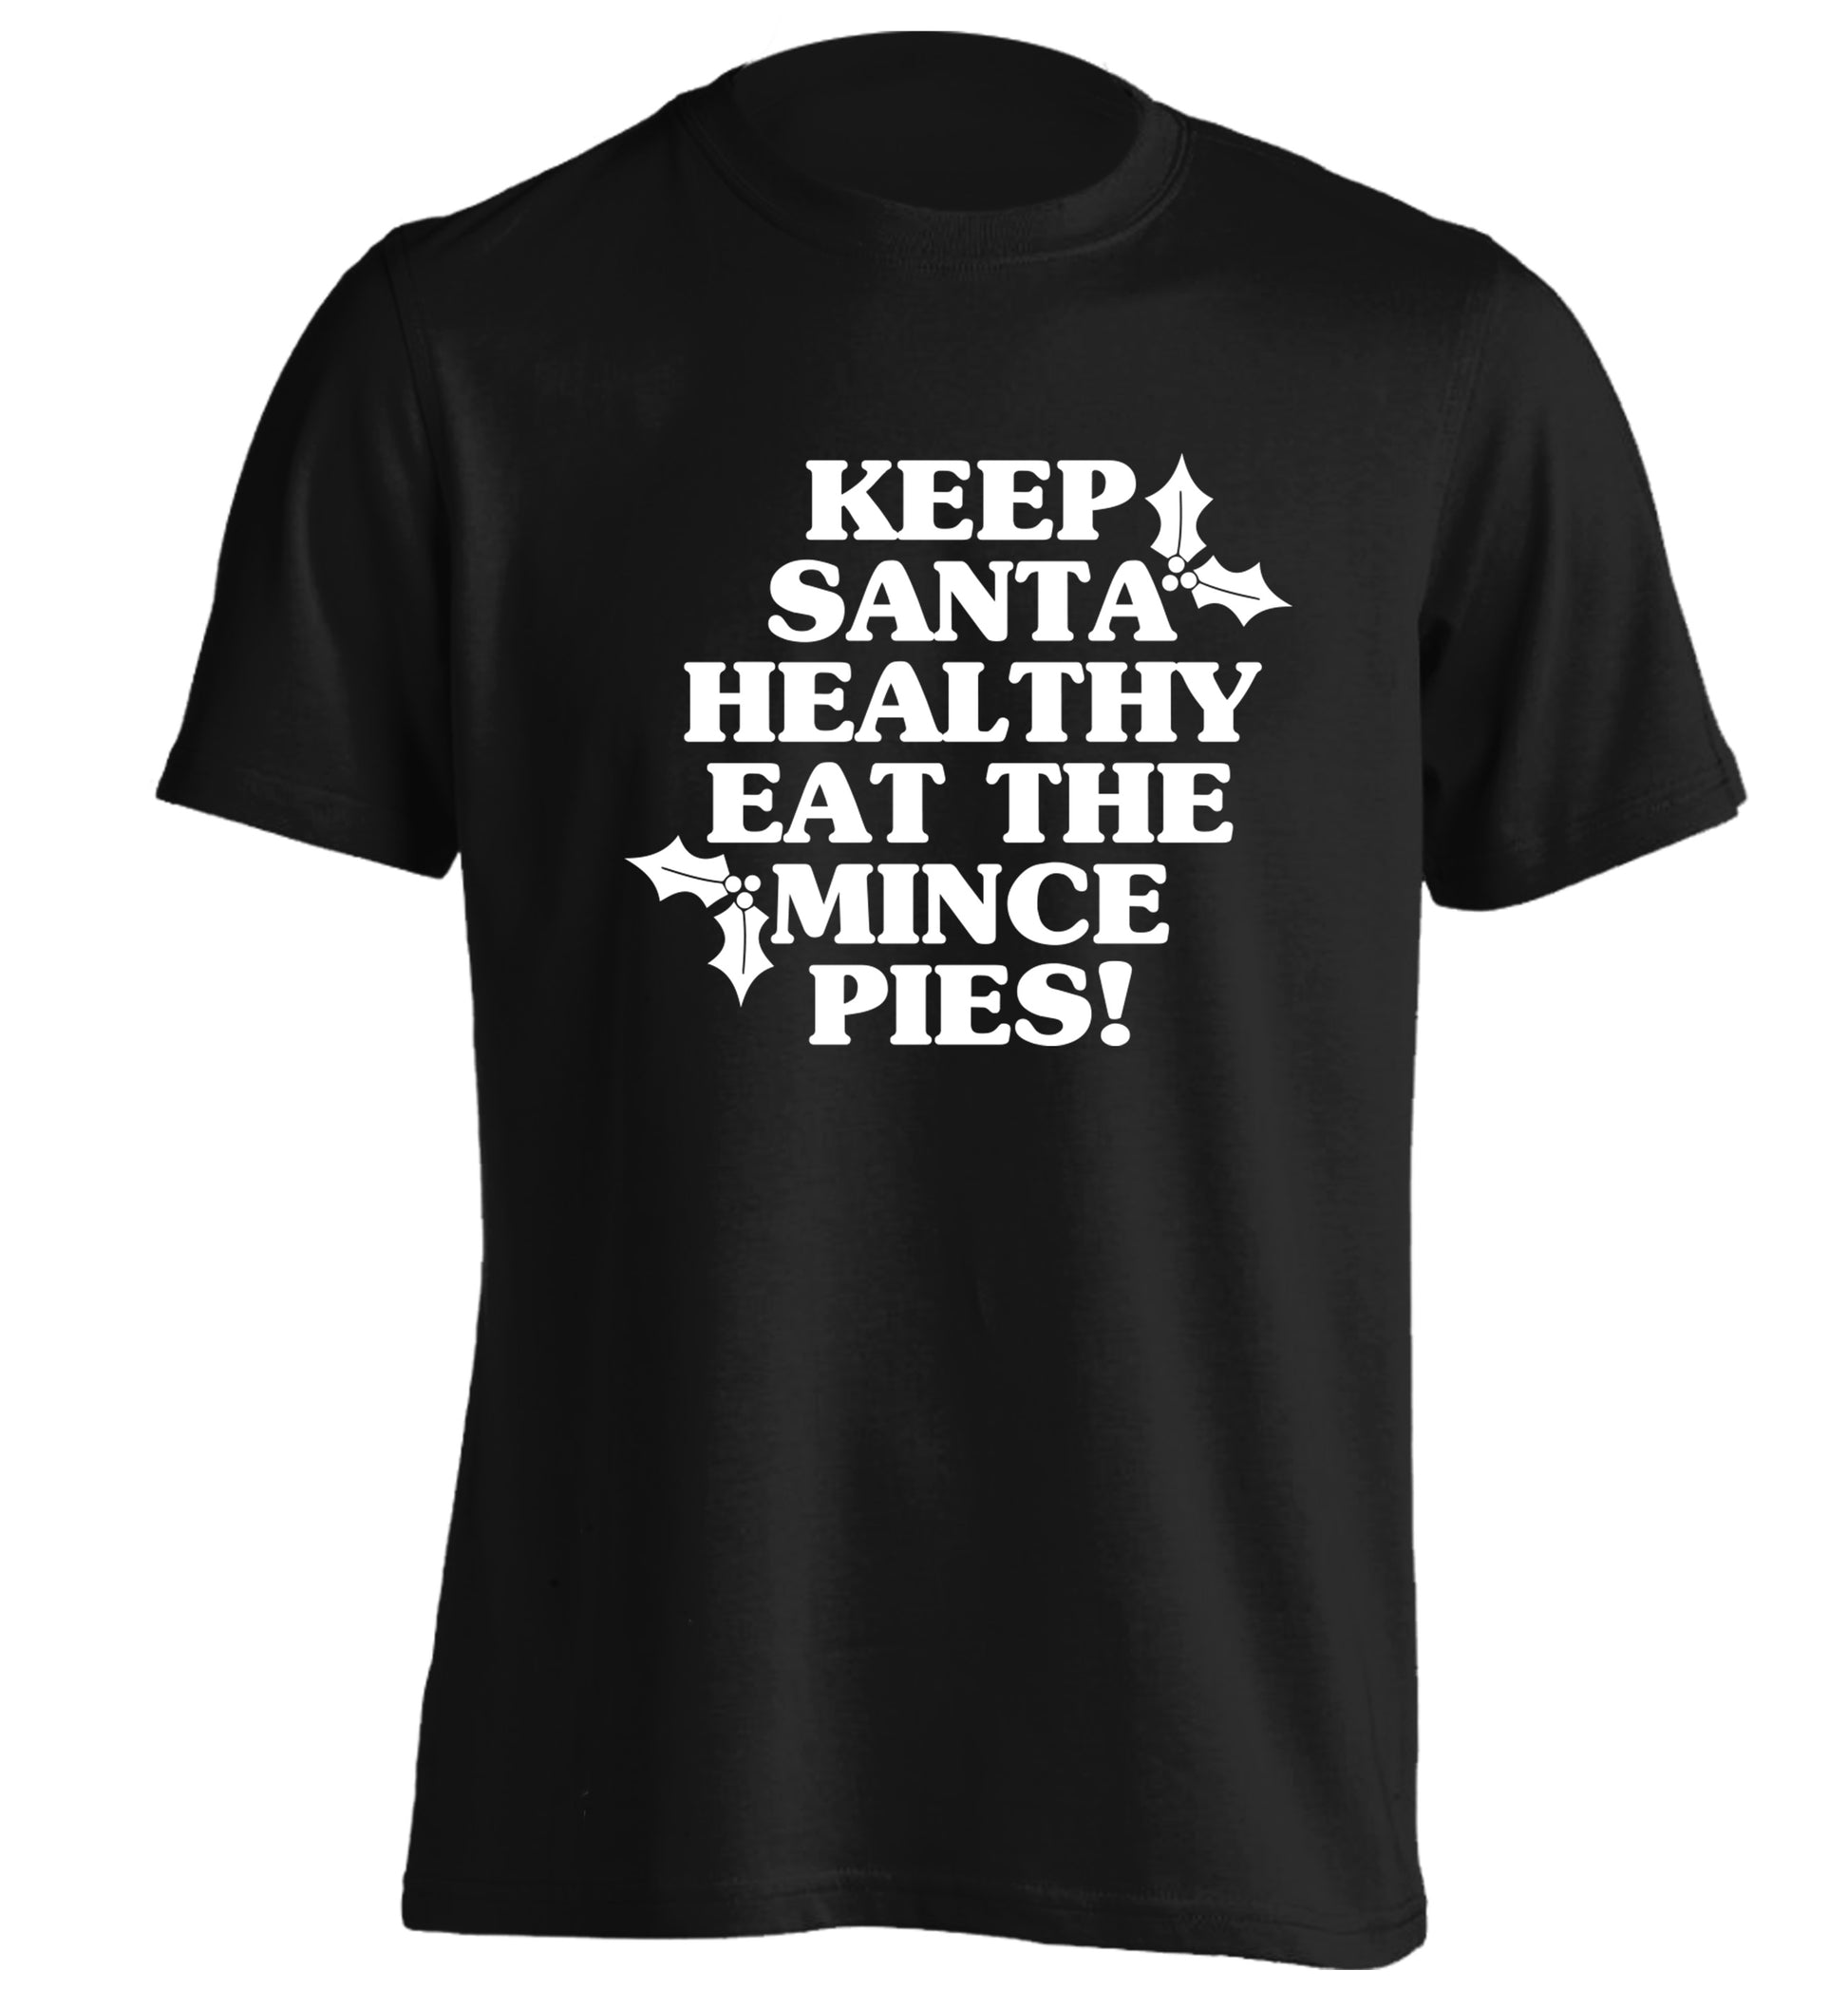 Keep santa healthy eat the mince pies adults unisex black Tshirt 2XL